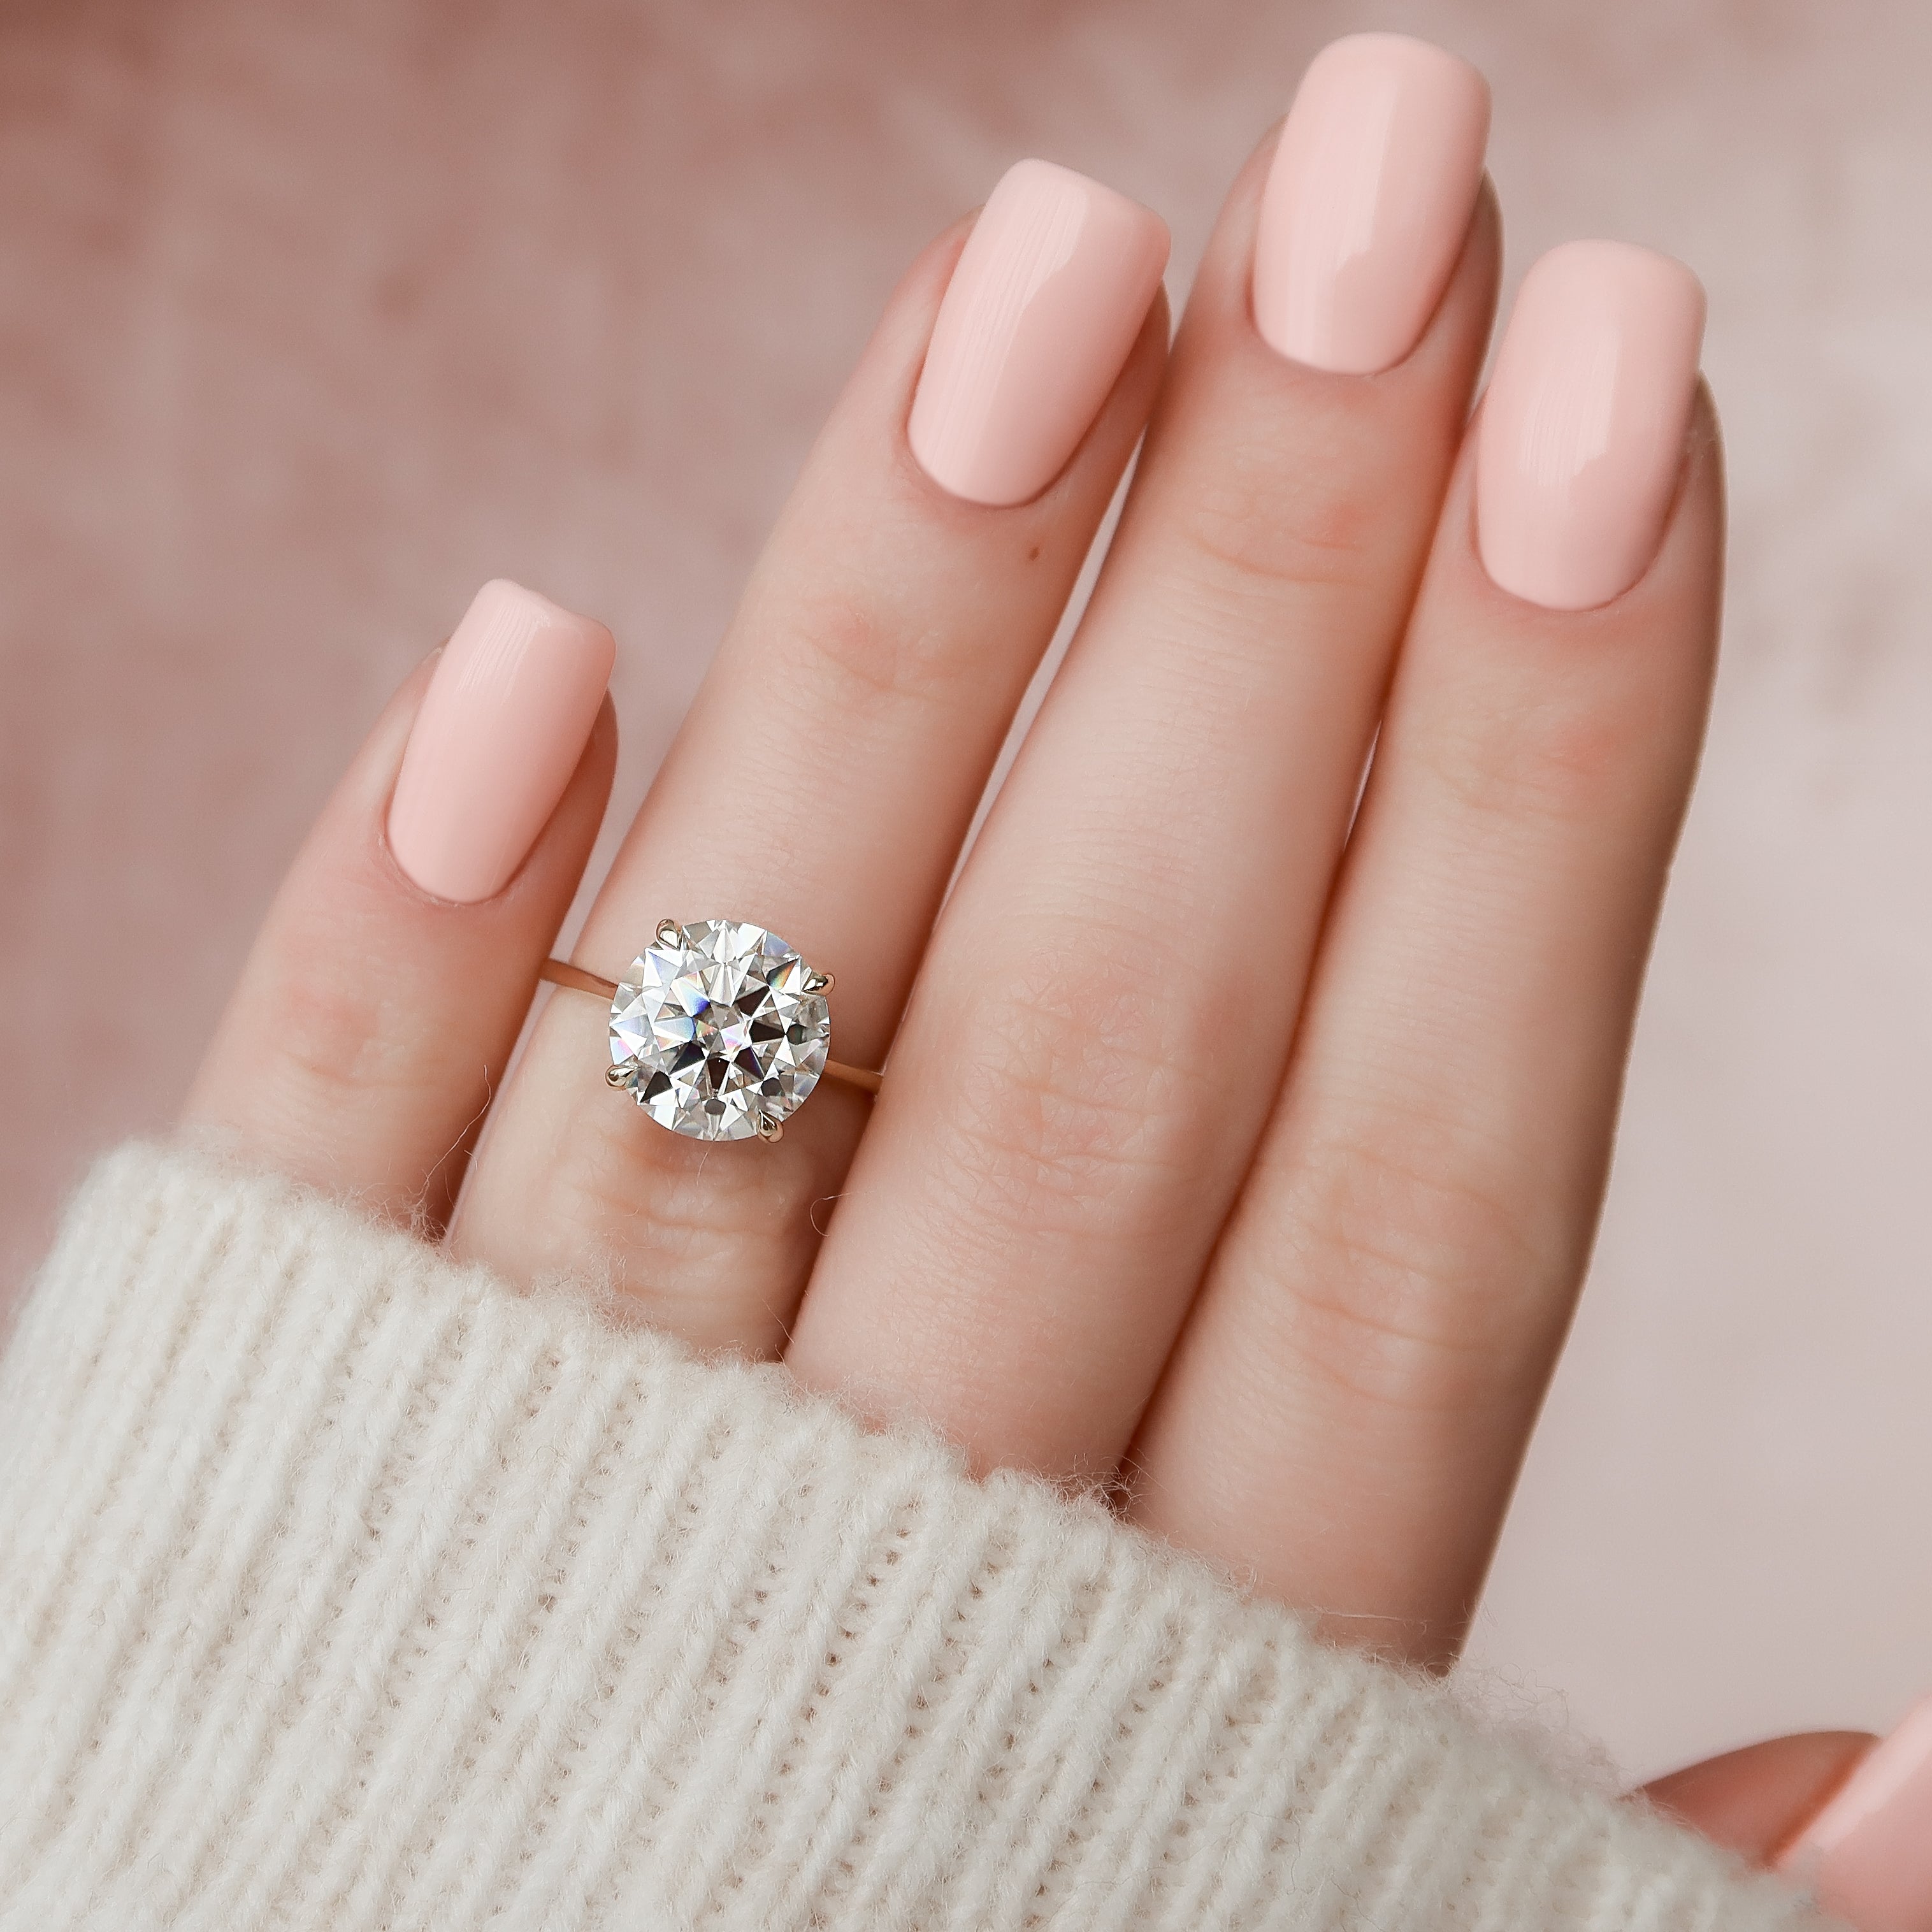 4 carat Cushion Cut Diamond Engagement Ring in Double Edge Halo - YouTube